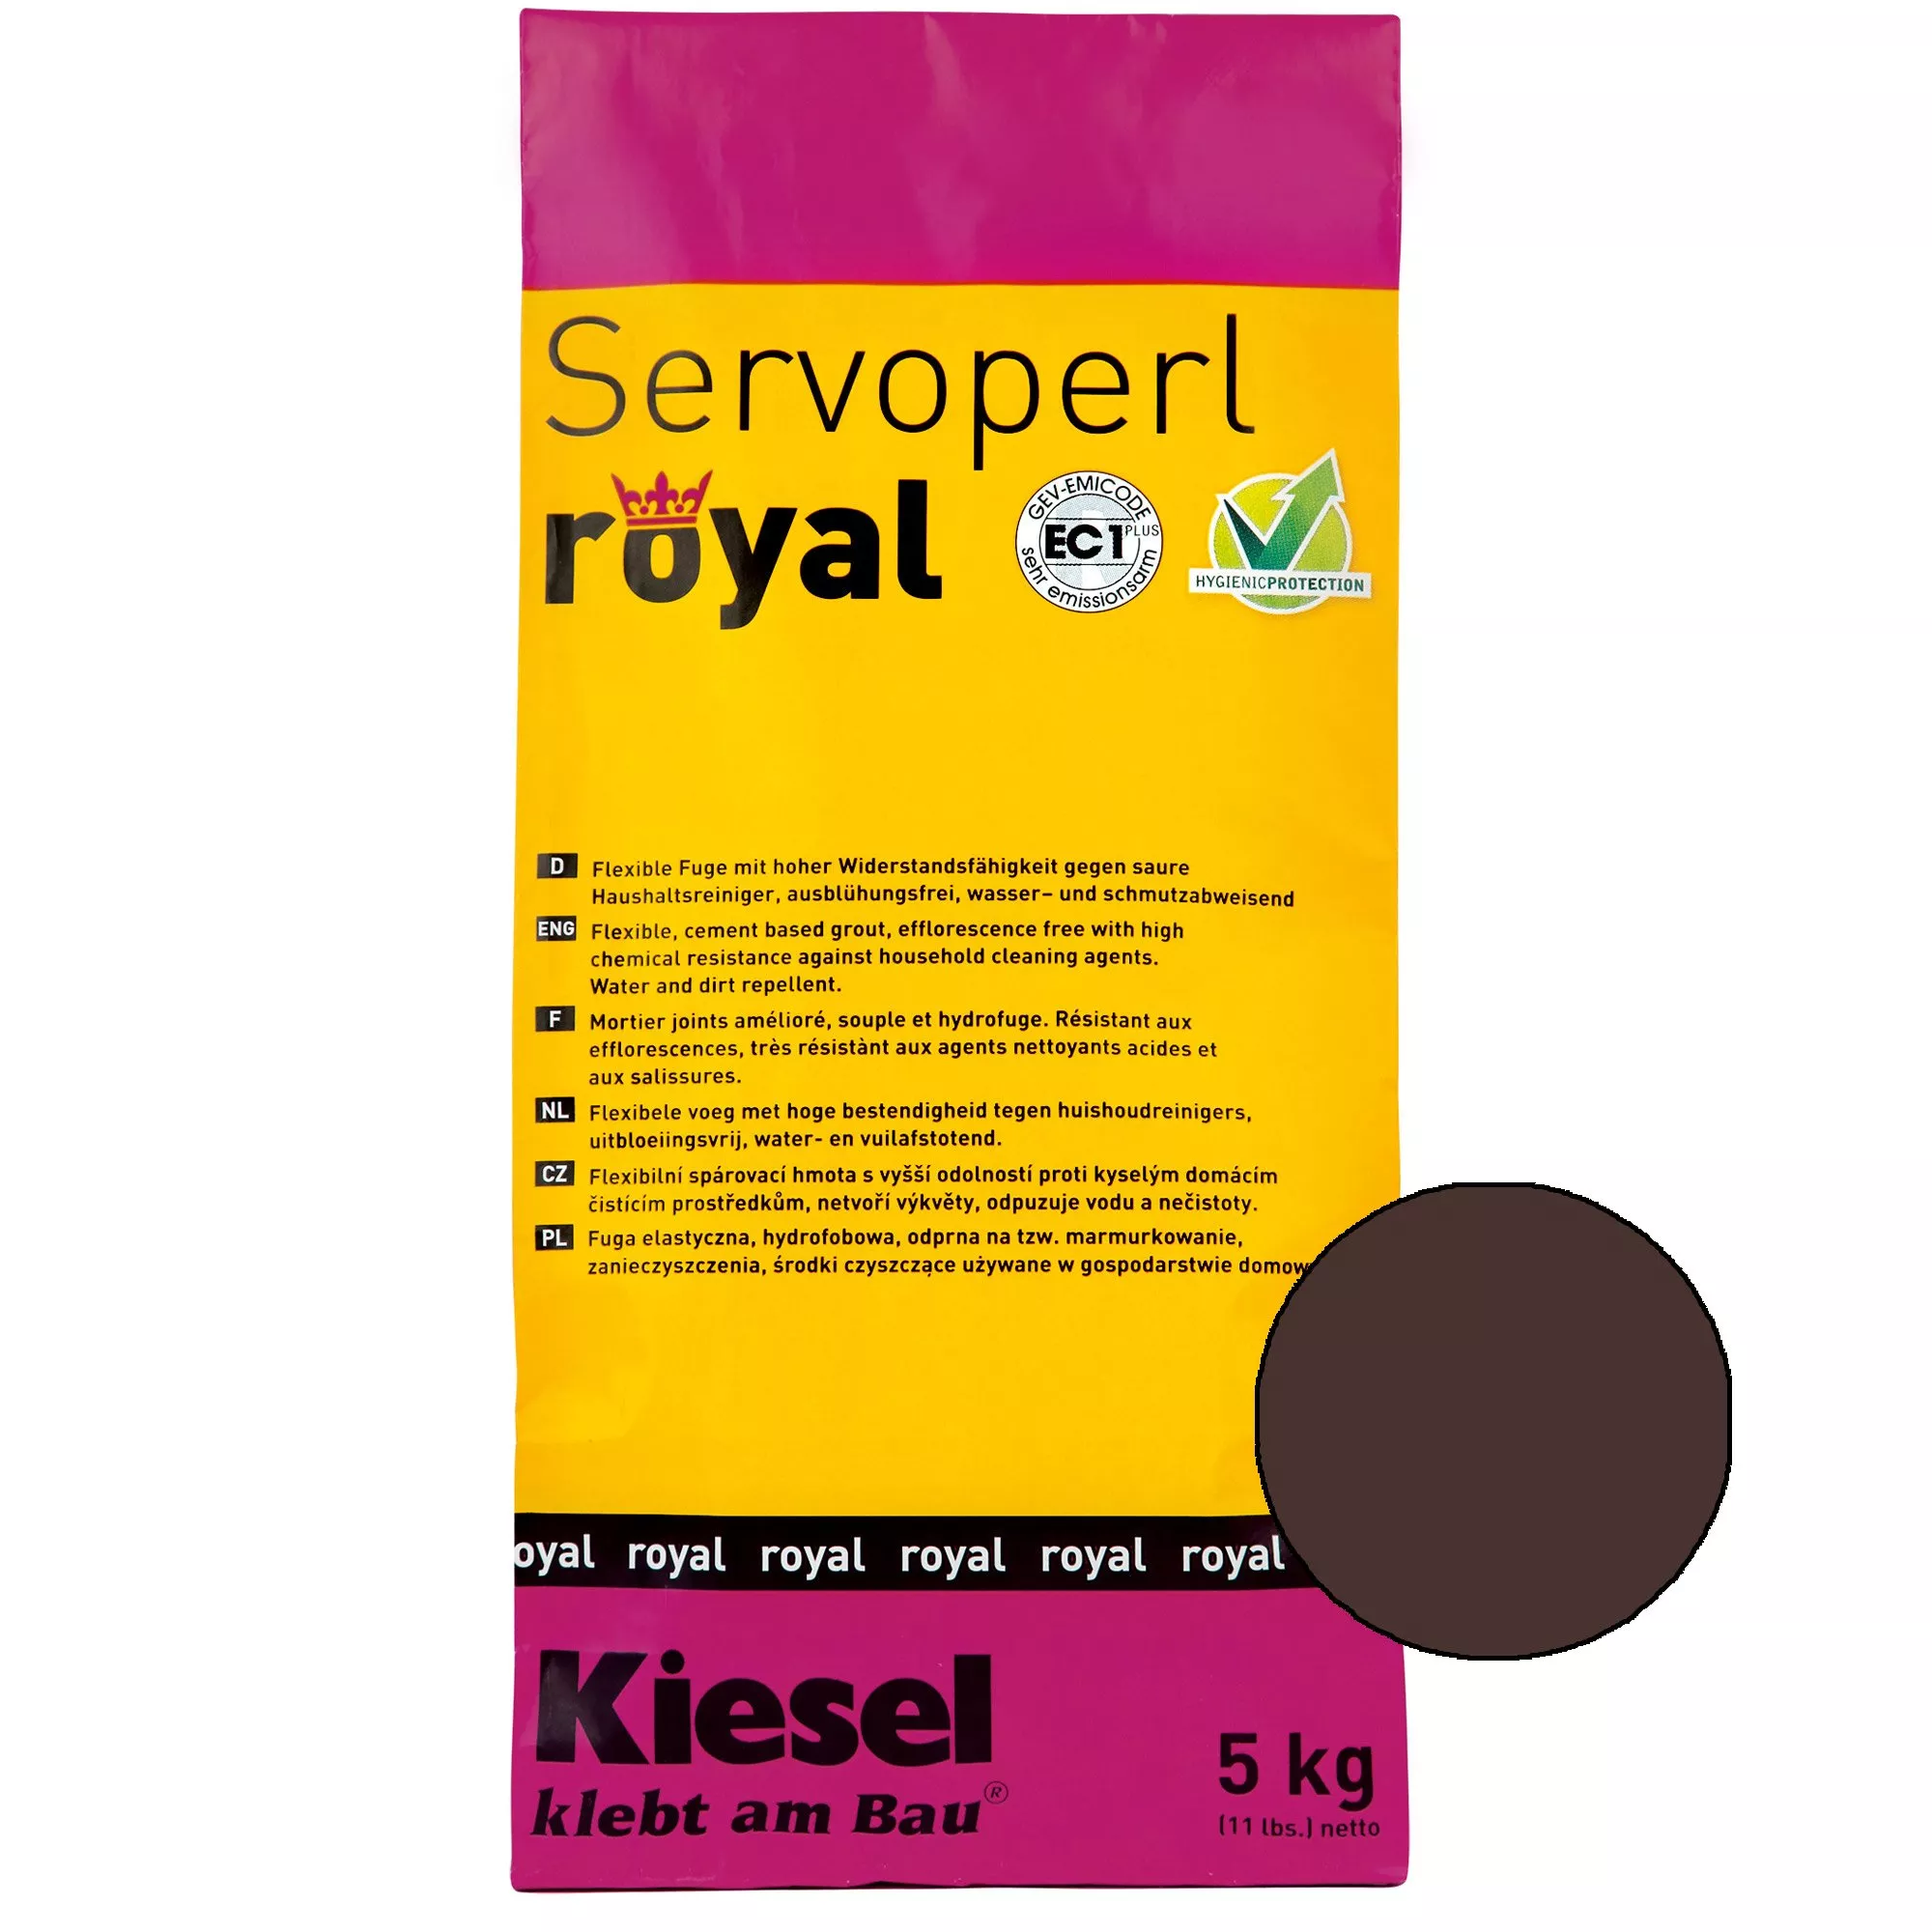 Kiesel Servoperl royal - Εύκαμπτος, υδατοαπωθητικός σύνδεσμος